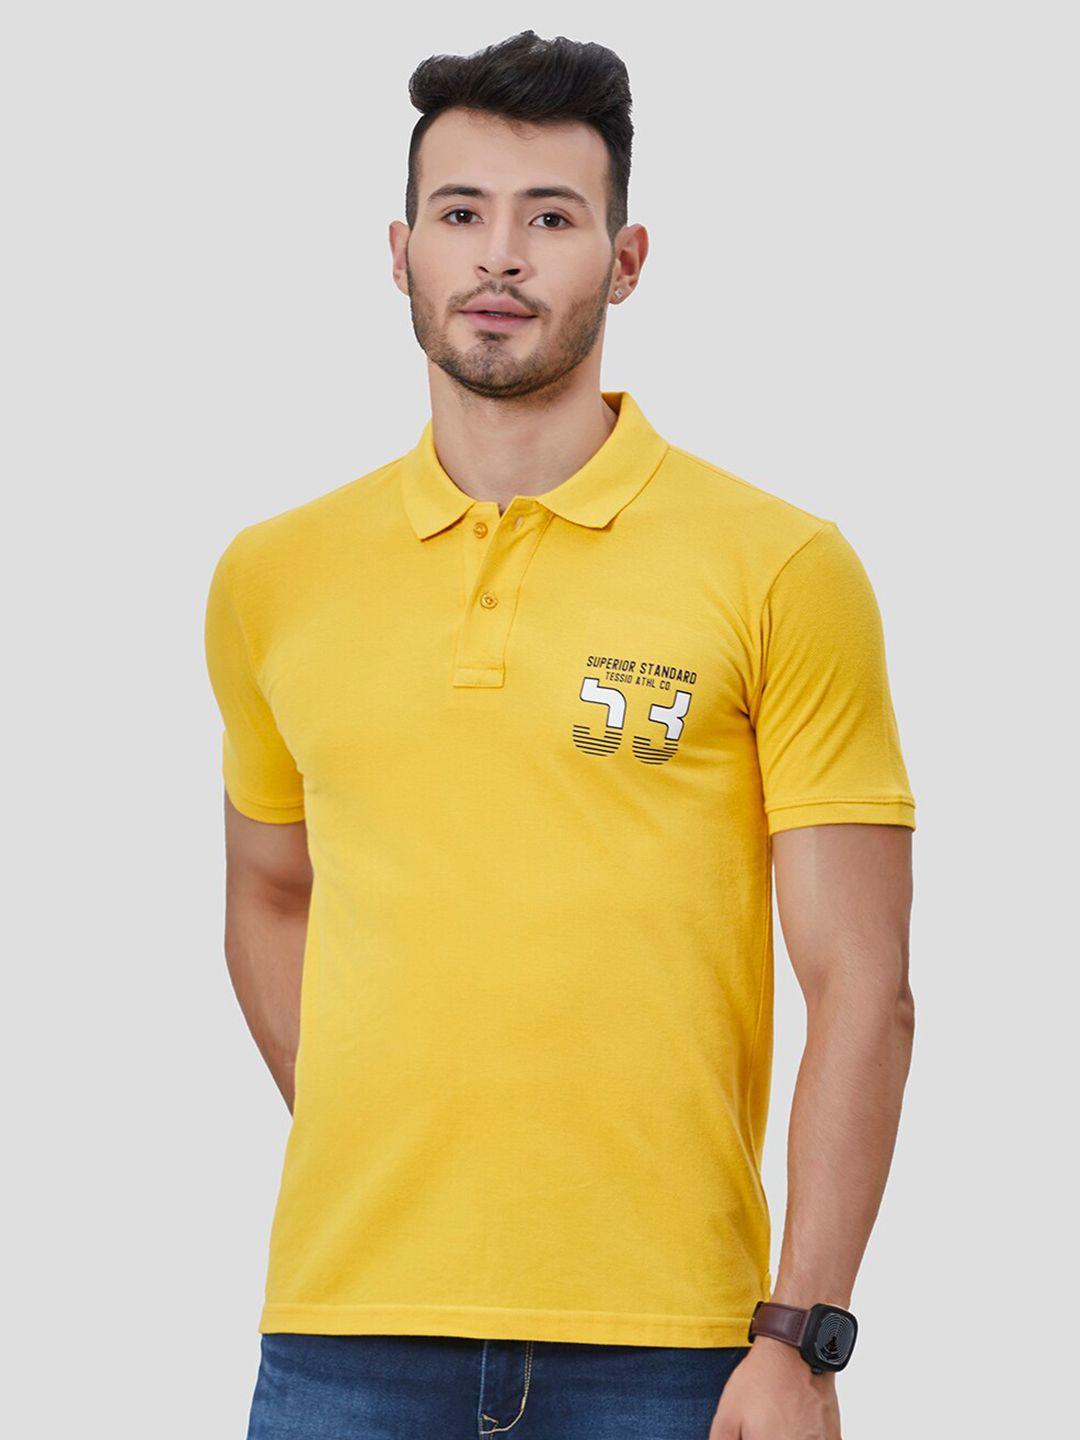 tessio men mustard yellow pockets t-shirt